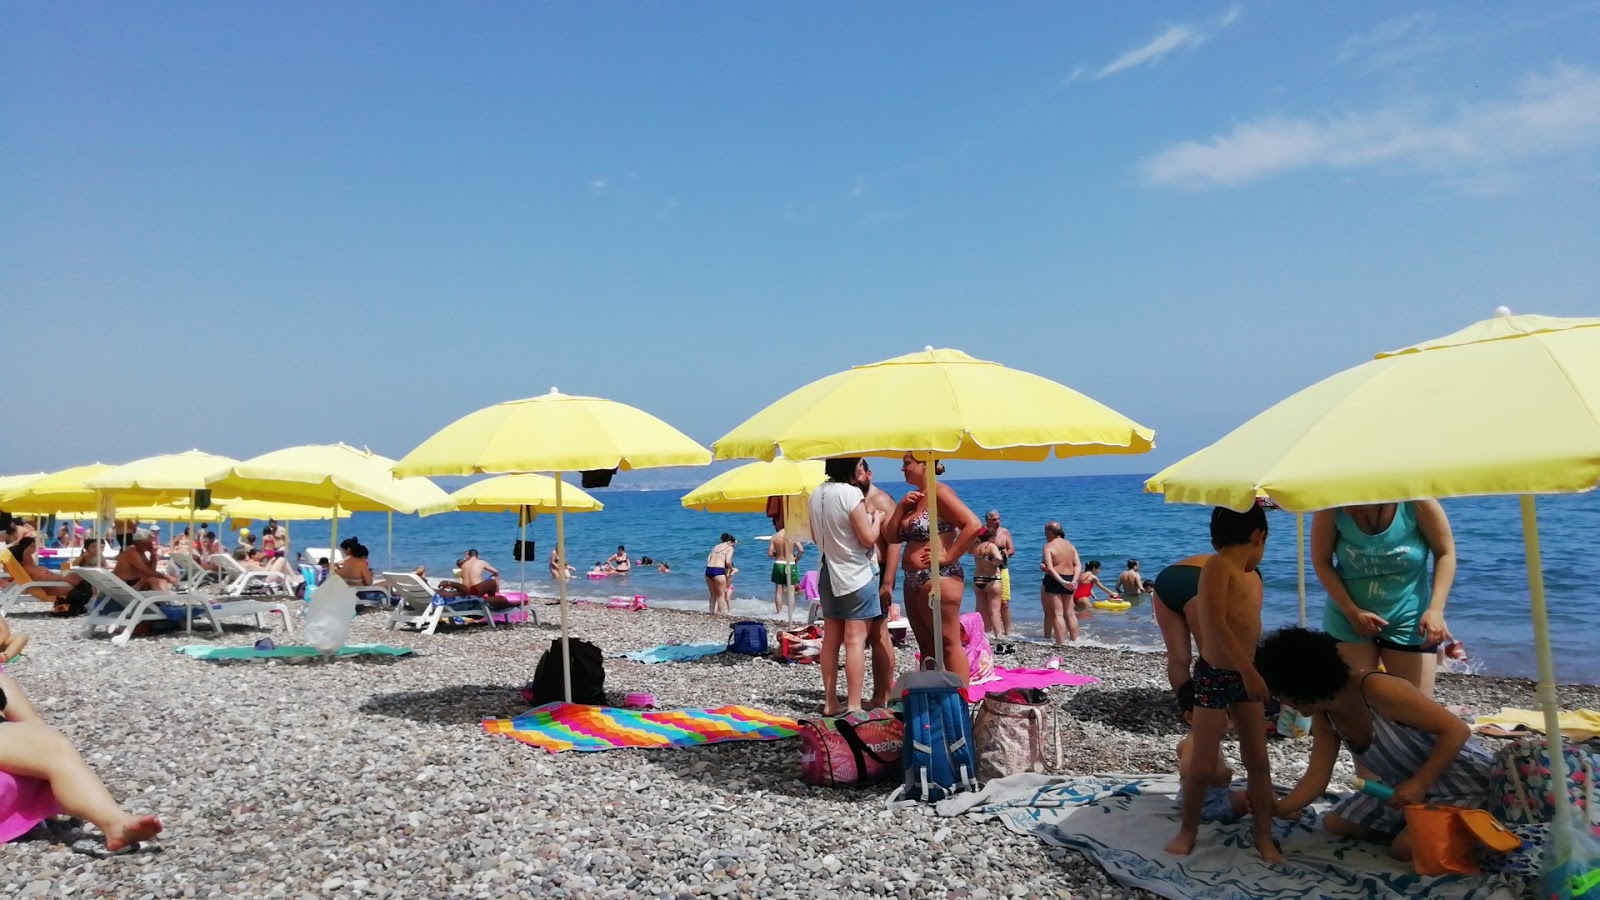 Photo of Lido Pagliacci beach resort area